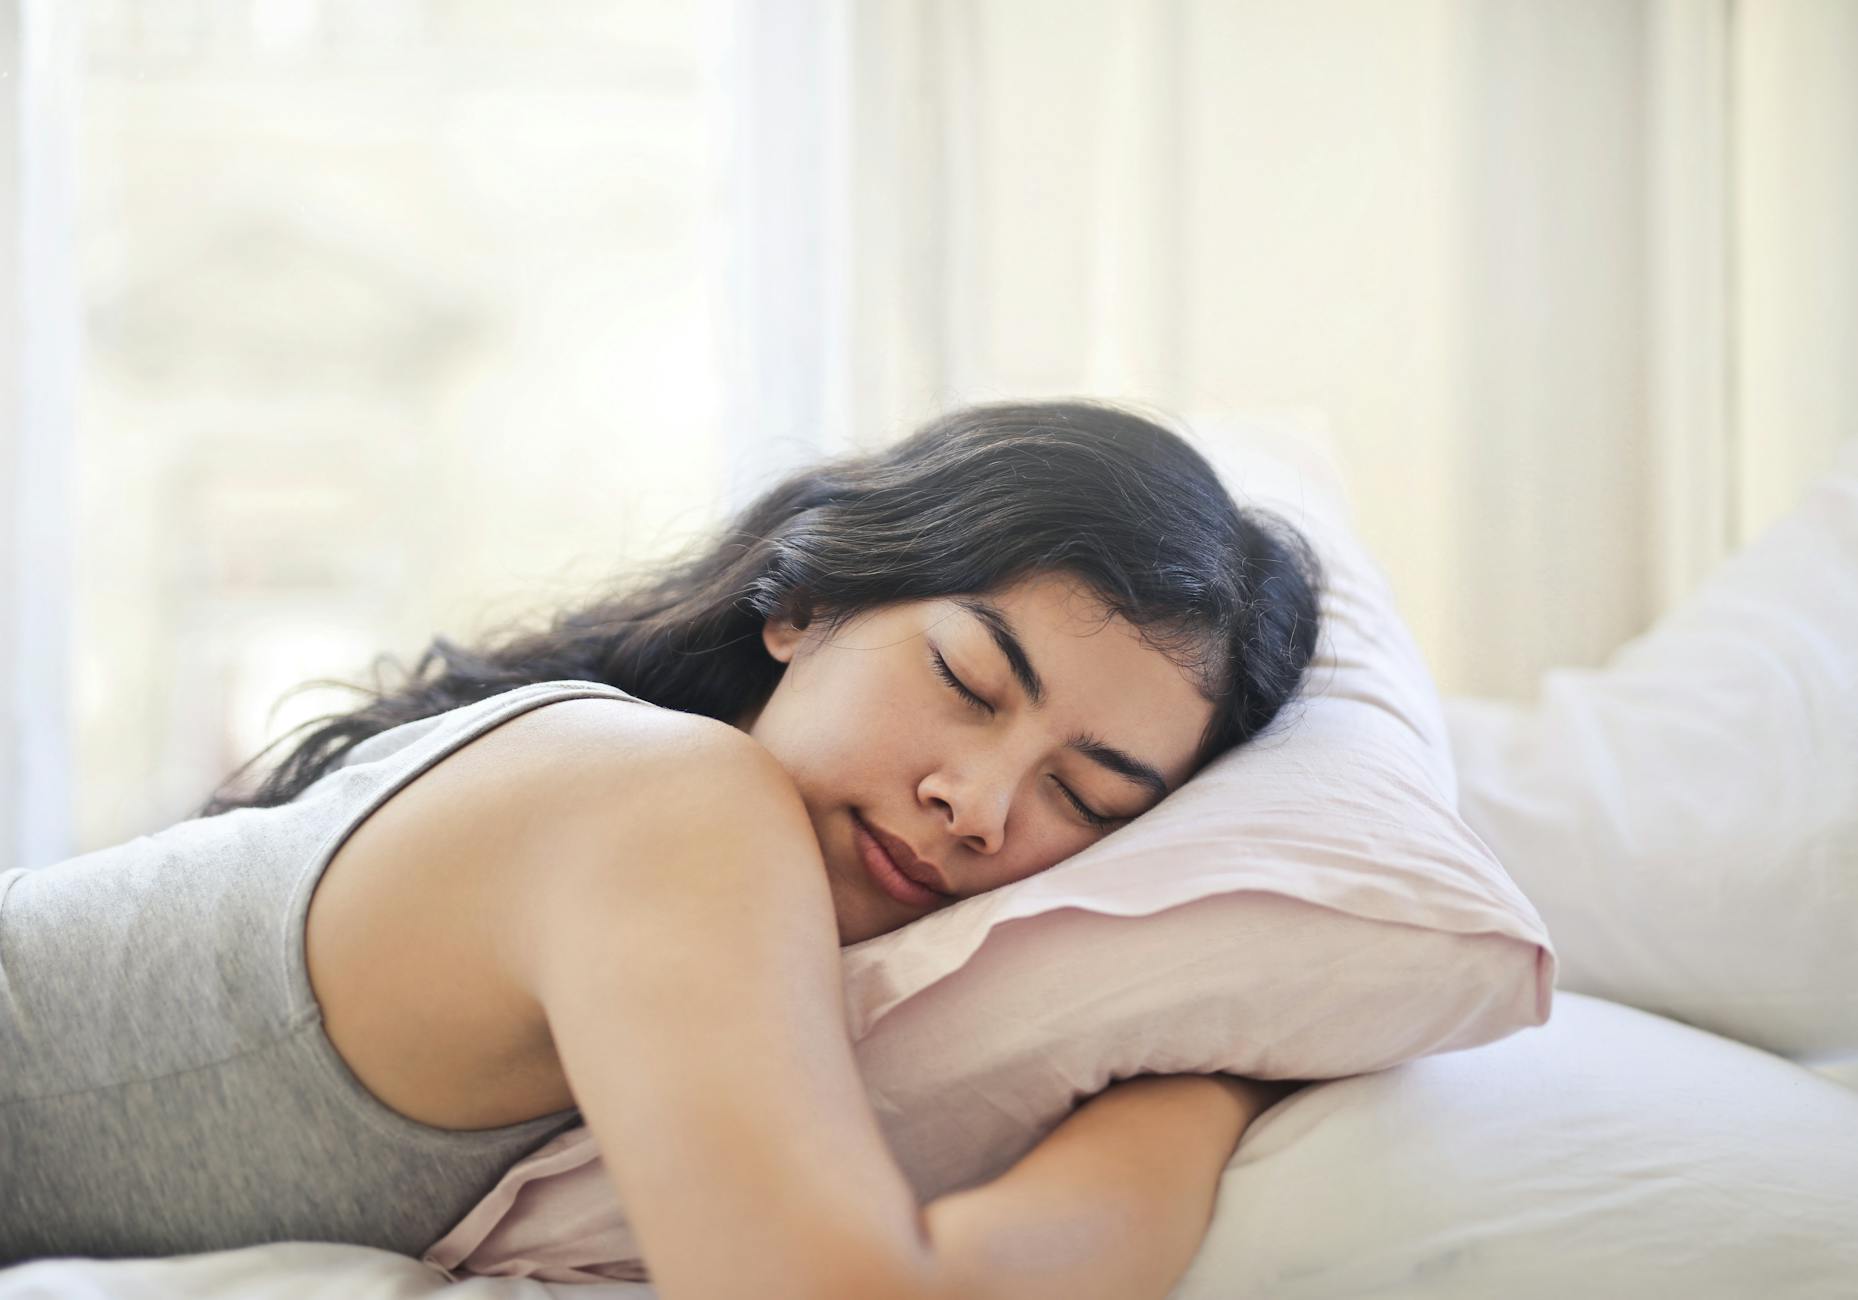 Image of a woman sleeping